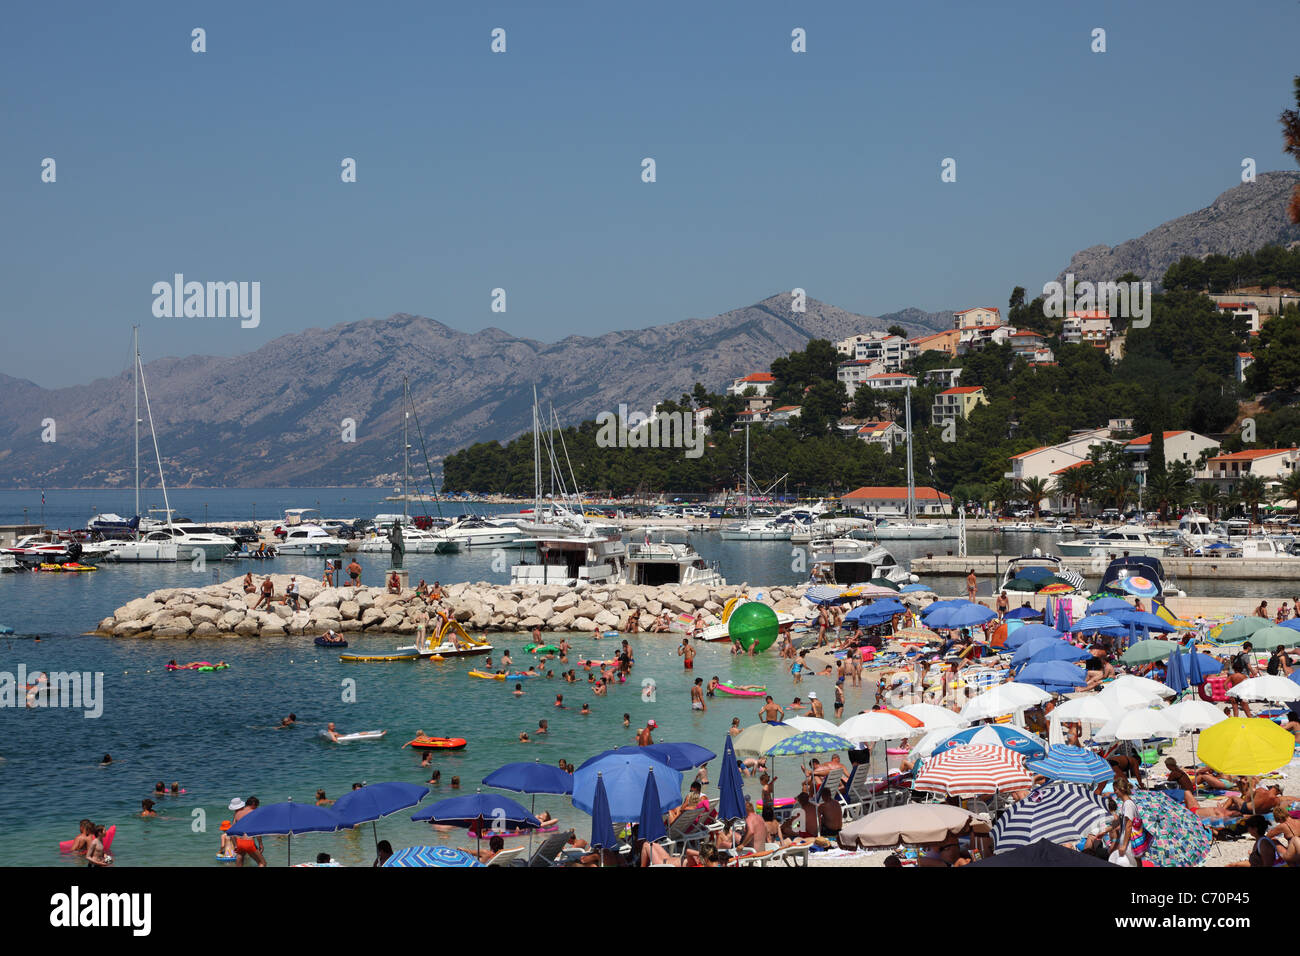 Crowded beach in the Adriatic resort Brela, Croatia Stock Photo